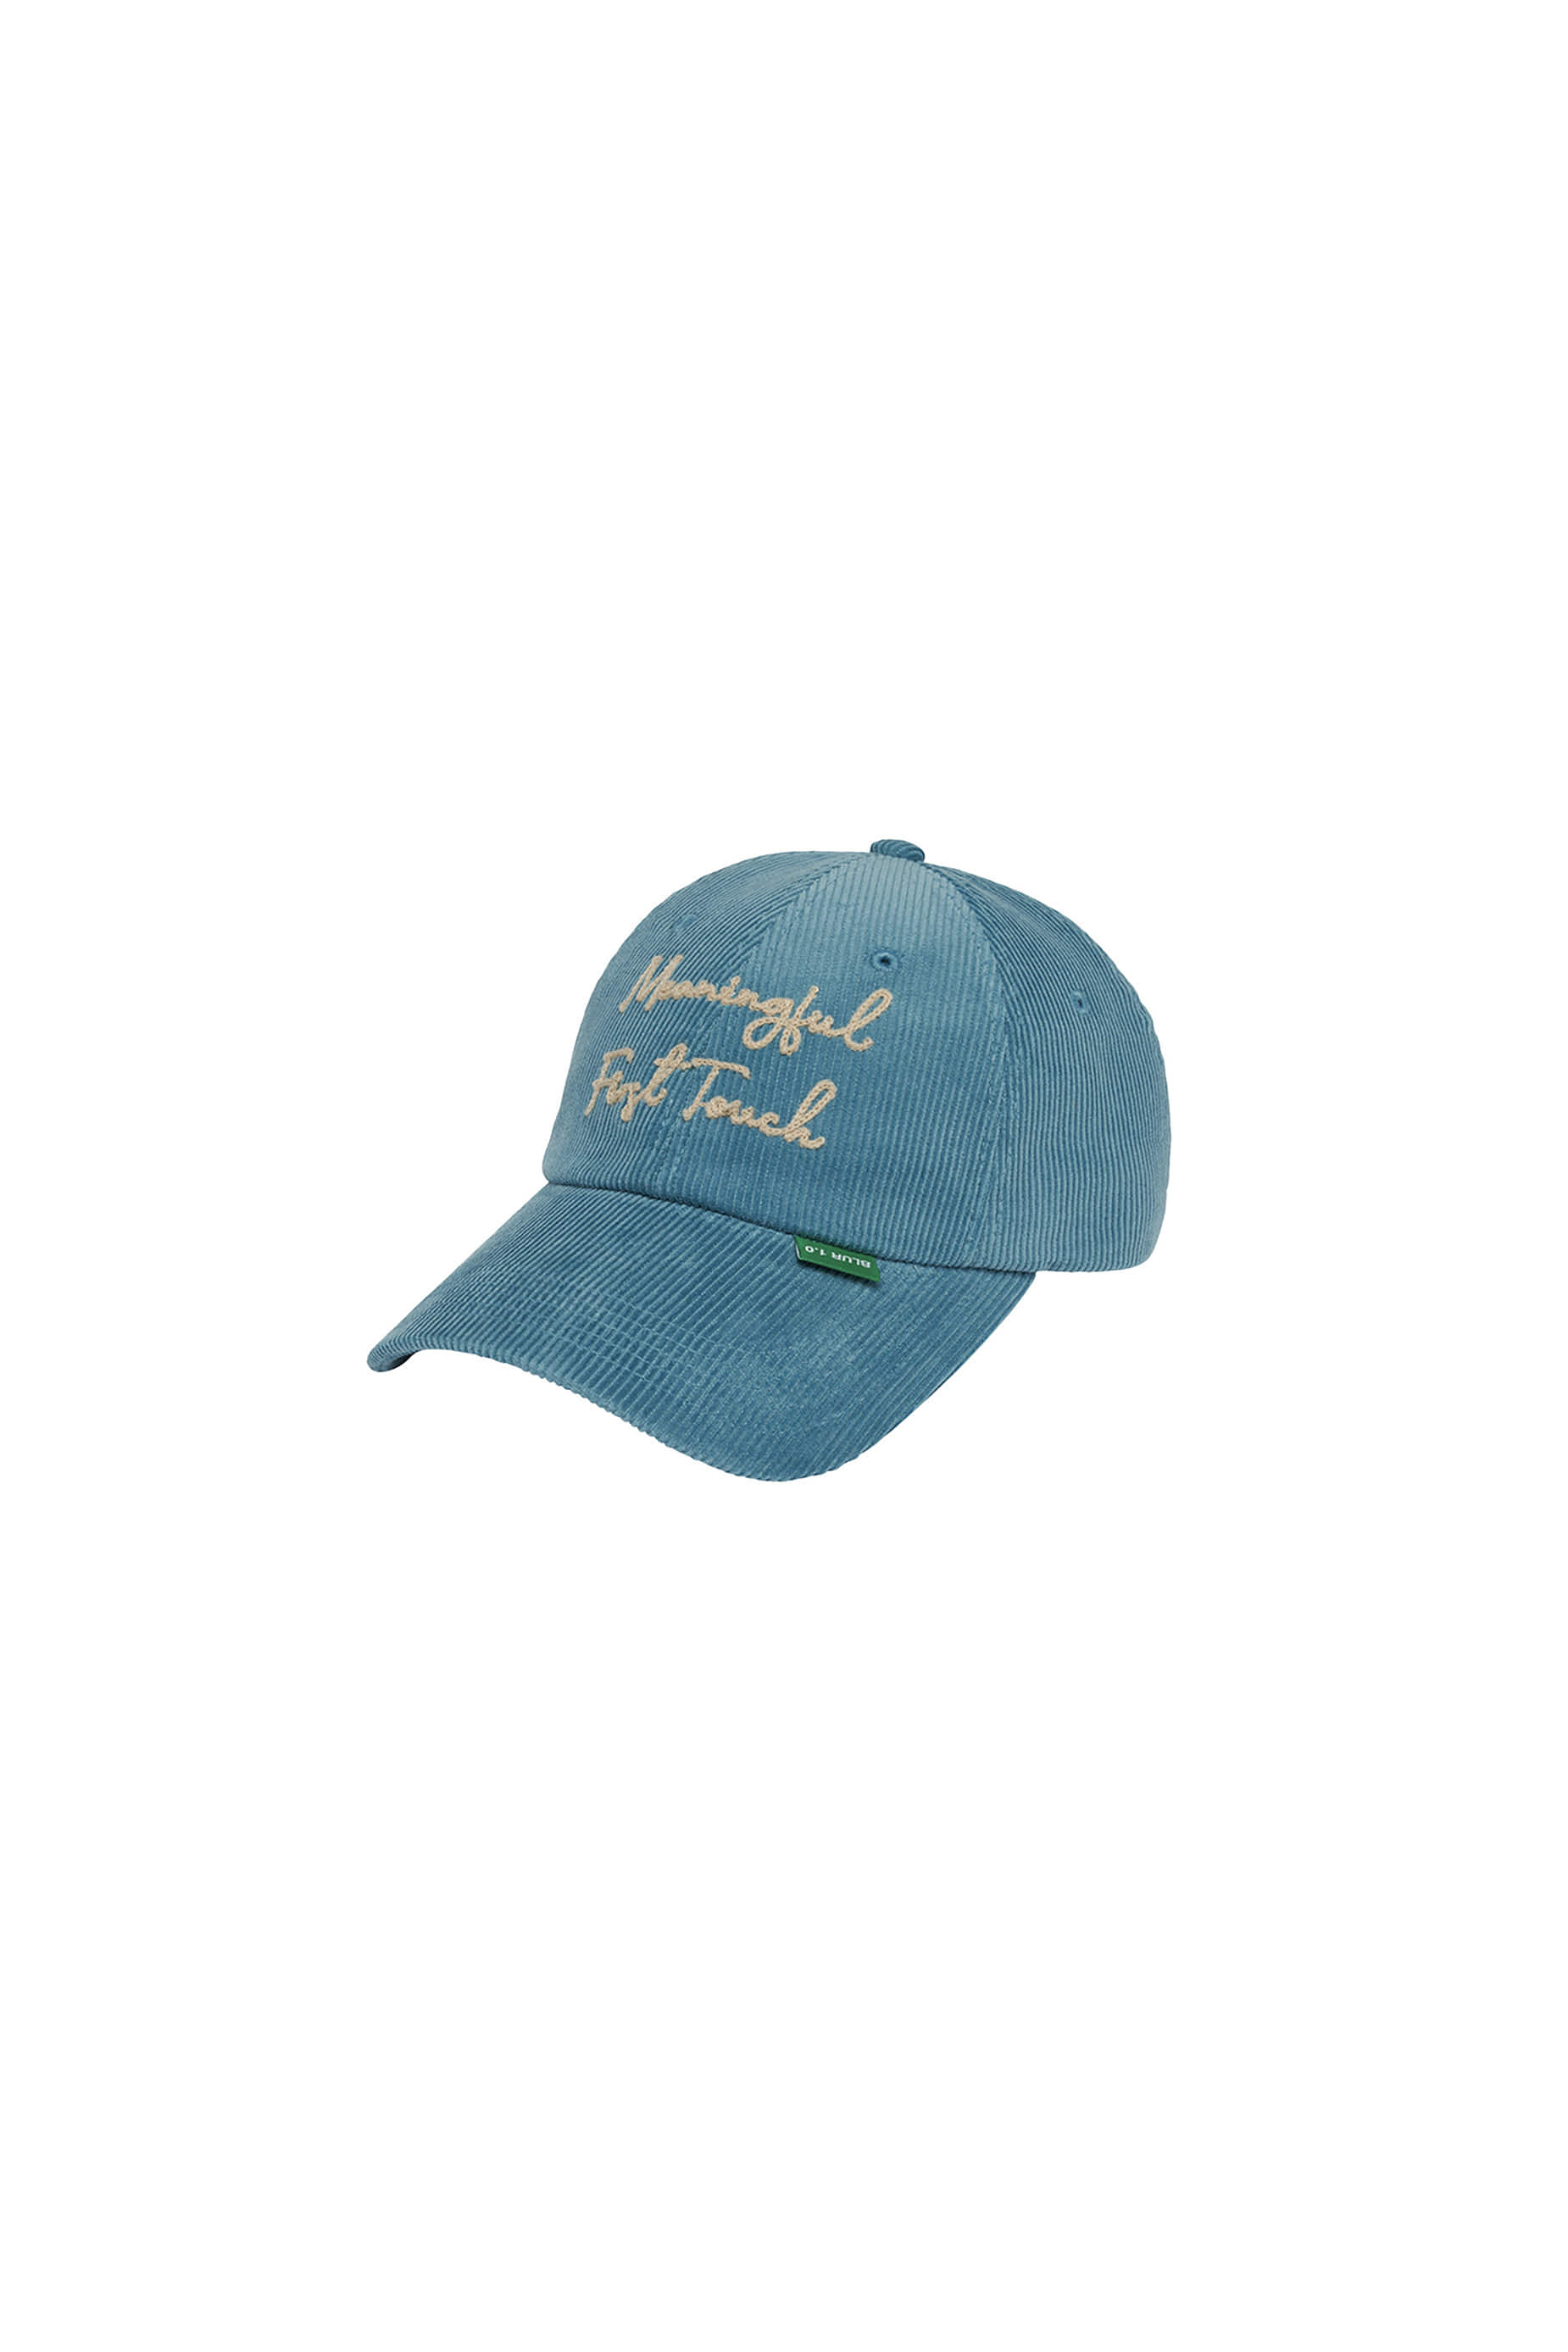 MEANINGFUL CORDUROY CAP - BLUE GREEN